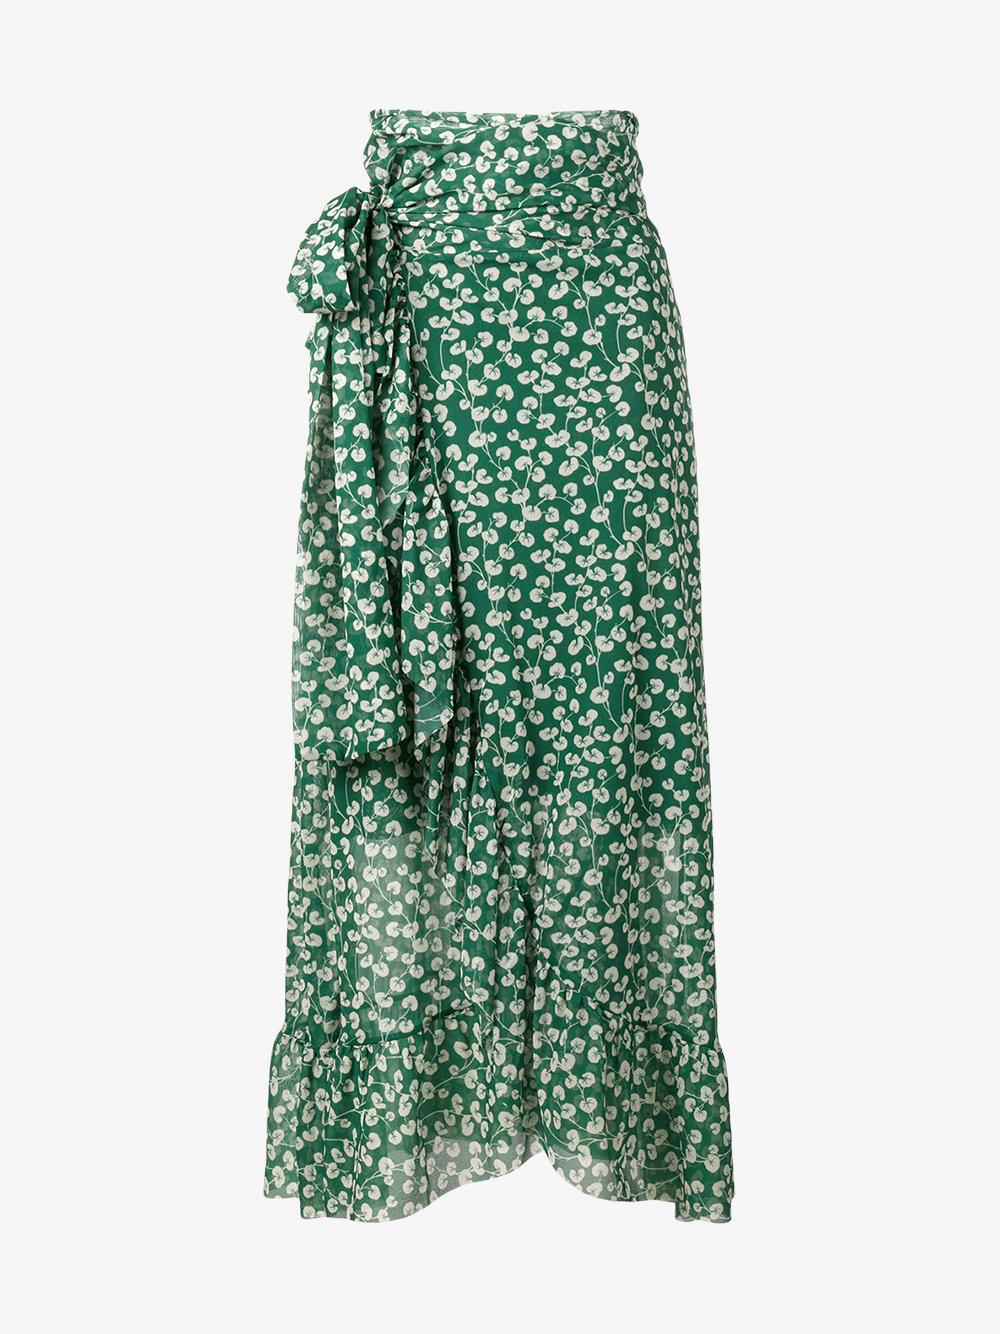 Ganni Capella Mesh Floral Print Skirt in Green | Lyst